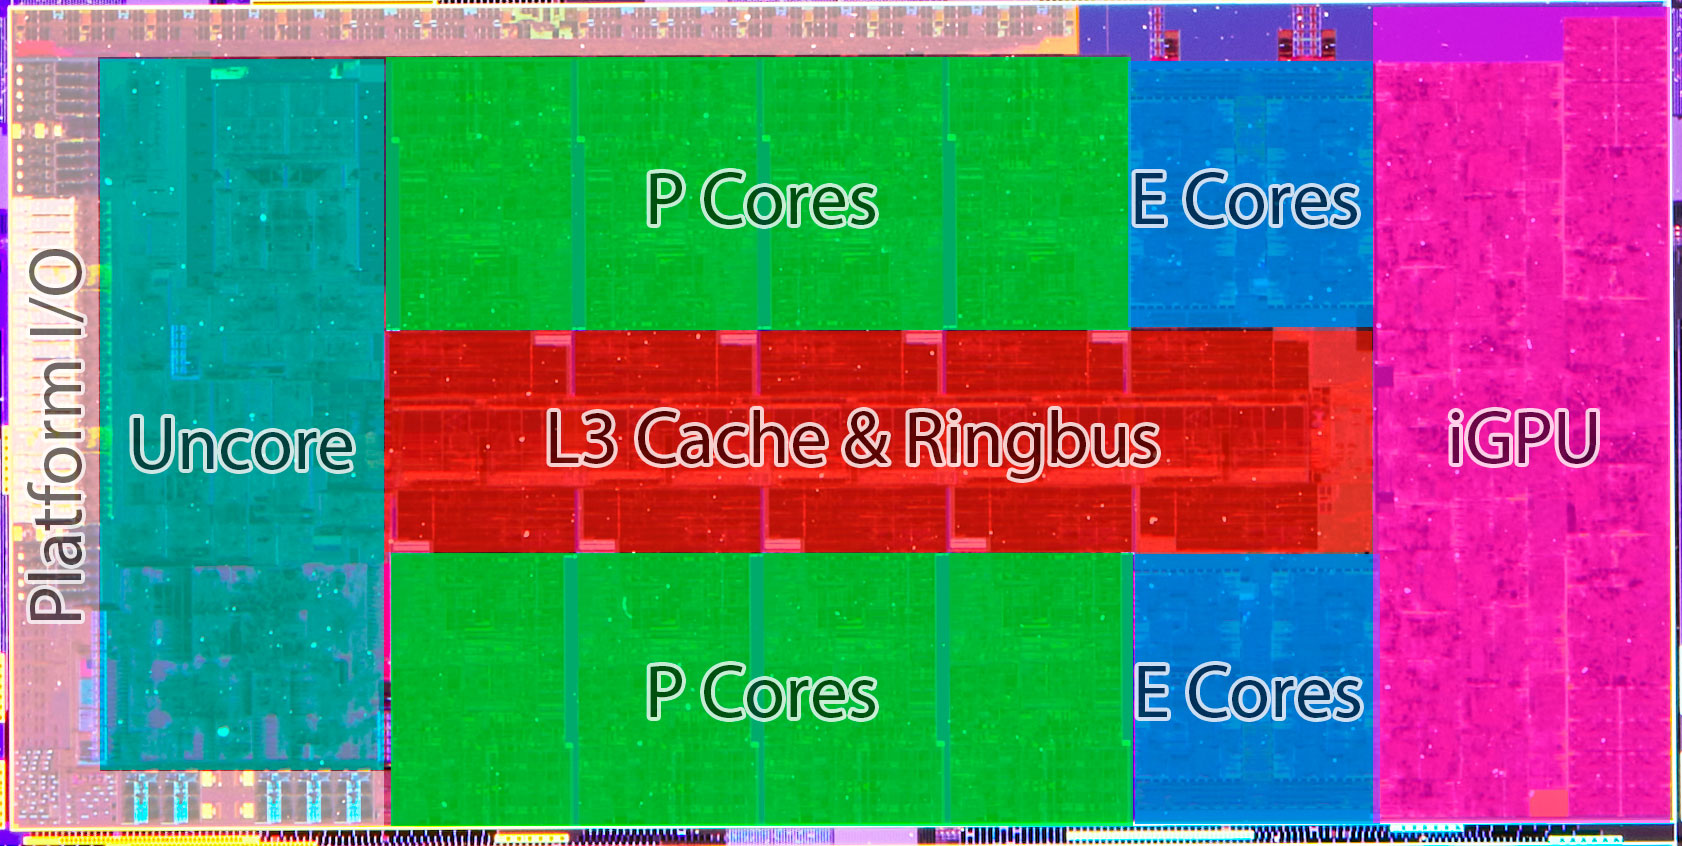 Conclusion - The Intel Core i3-12300 Review: Quad-Core Alder Lake Shines